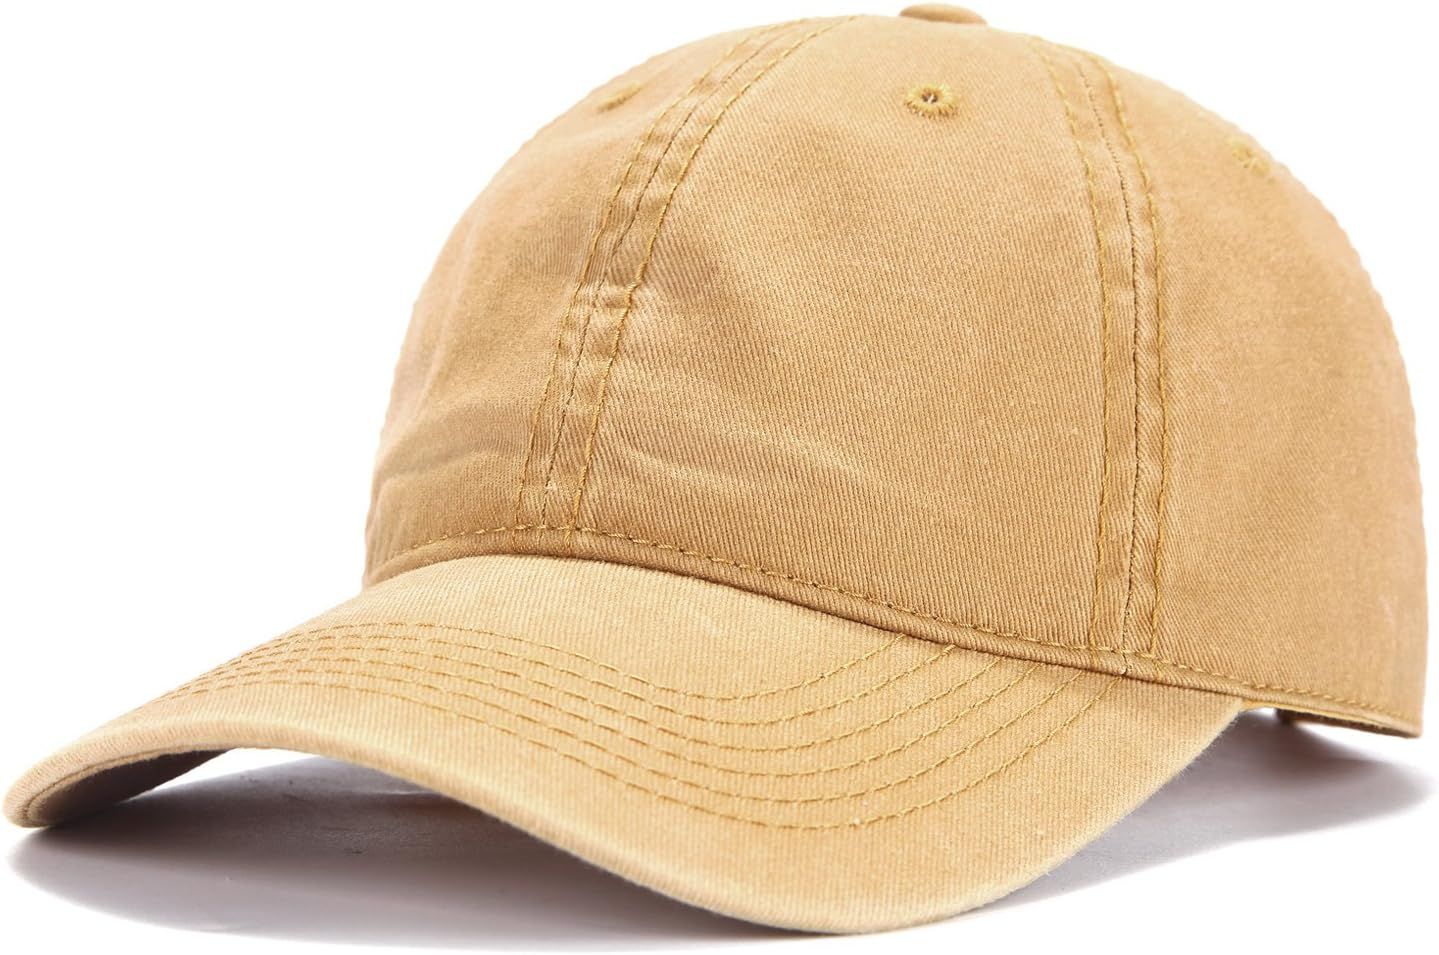 Edoneery Men Women Baseball Cap-Low Profile Adjustable Washed Cotton Golf Dad Hat | Amazon (US)